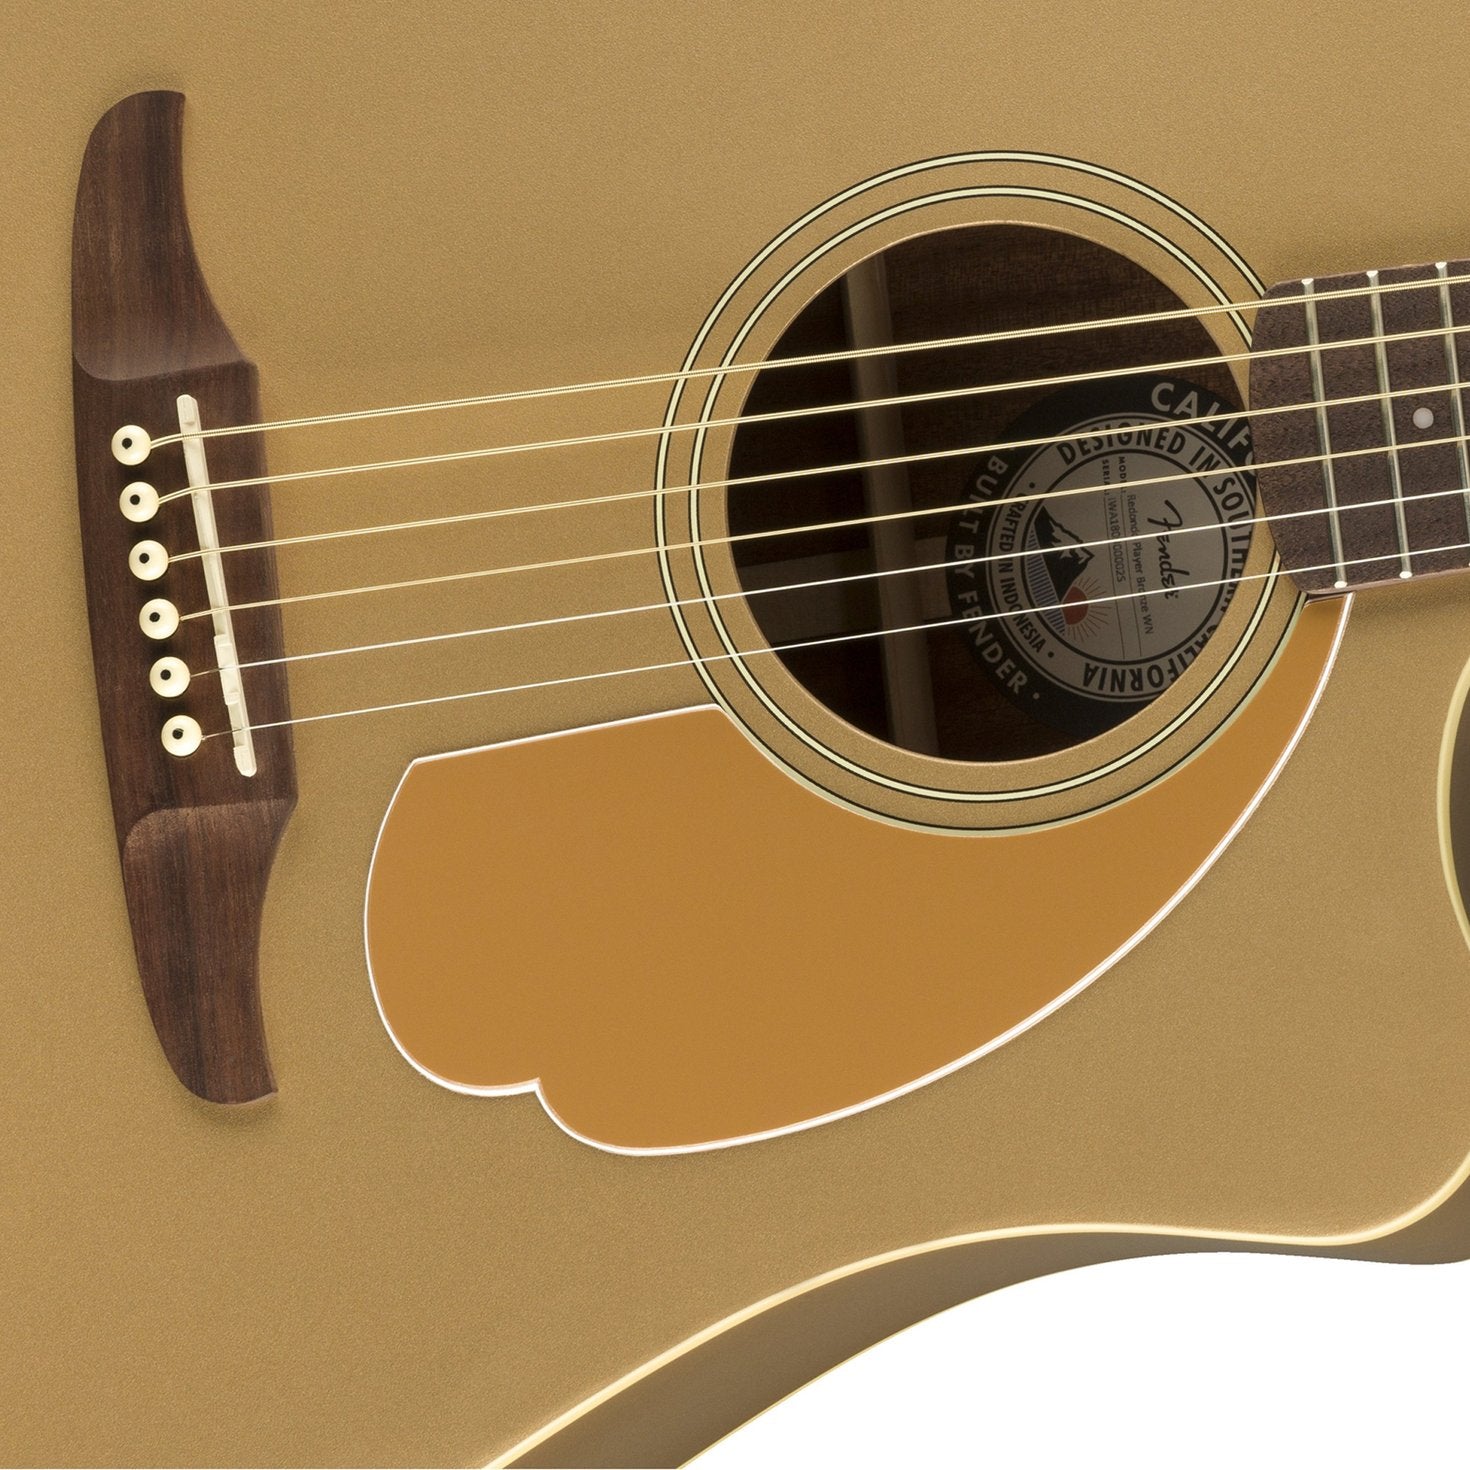 Fender California Redondo Player Slope-Shouldered Acoustic Guitar, Walnut FB, Bronze Satin, FENDER, ACOUSTIC GUITAR, fender-acoustic-guitar-f03-097-0713-553, ZOSO MUSIC SDN BHD